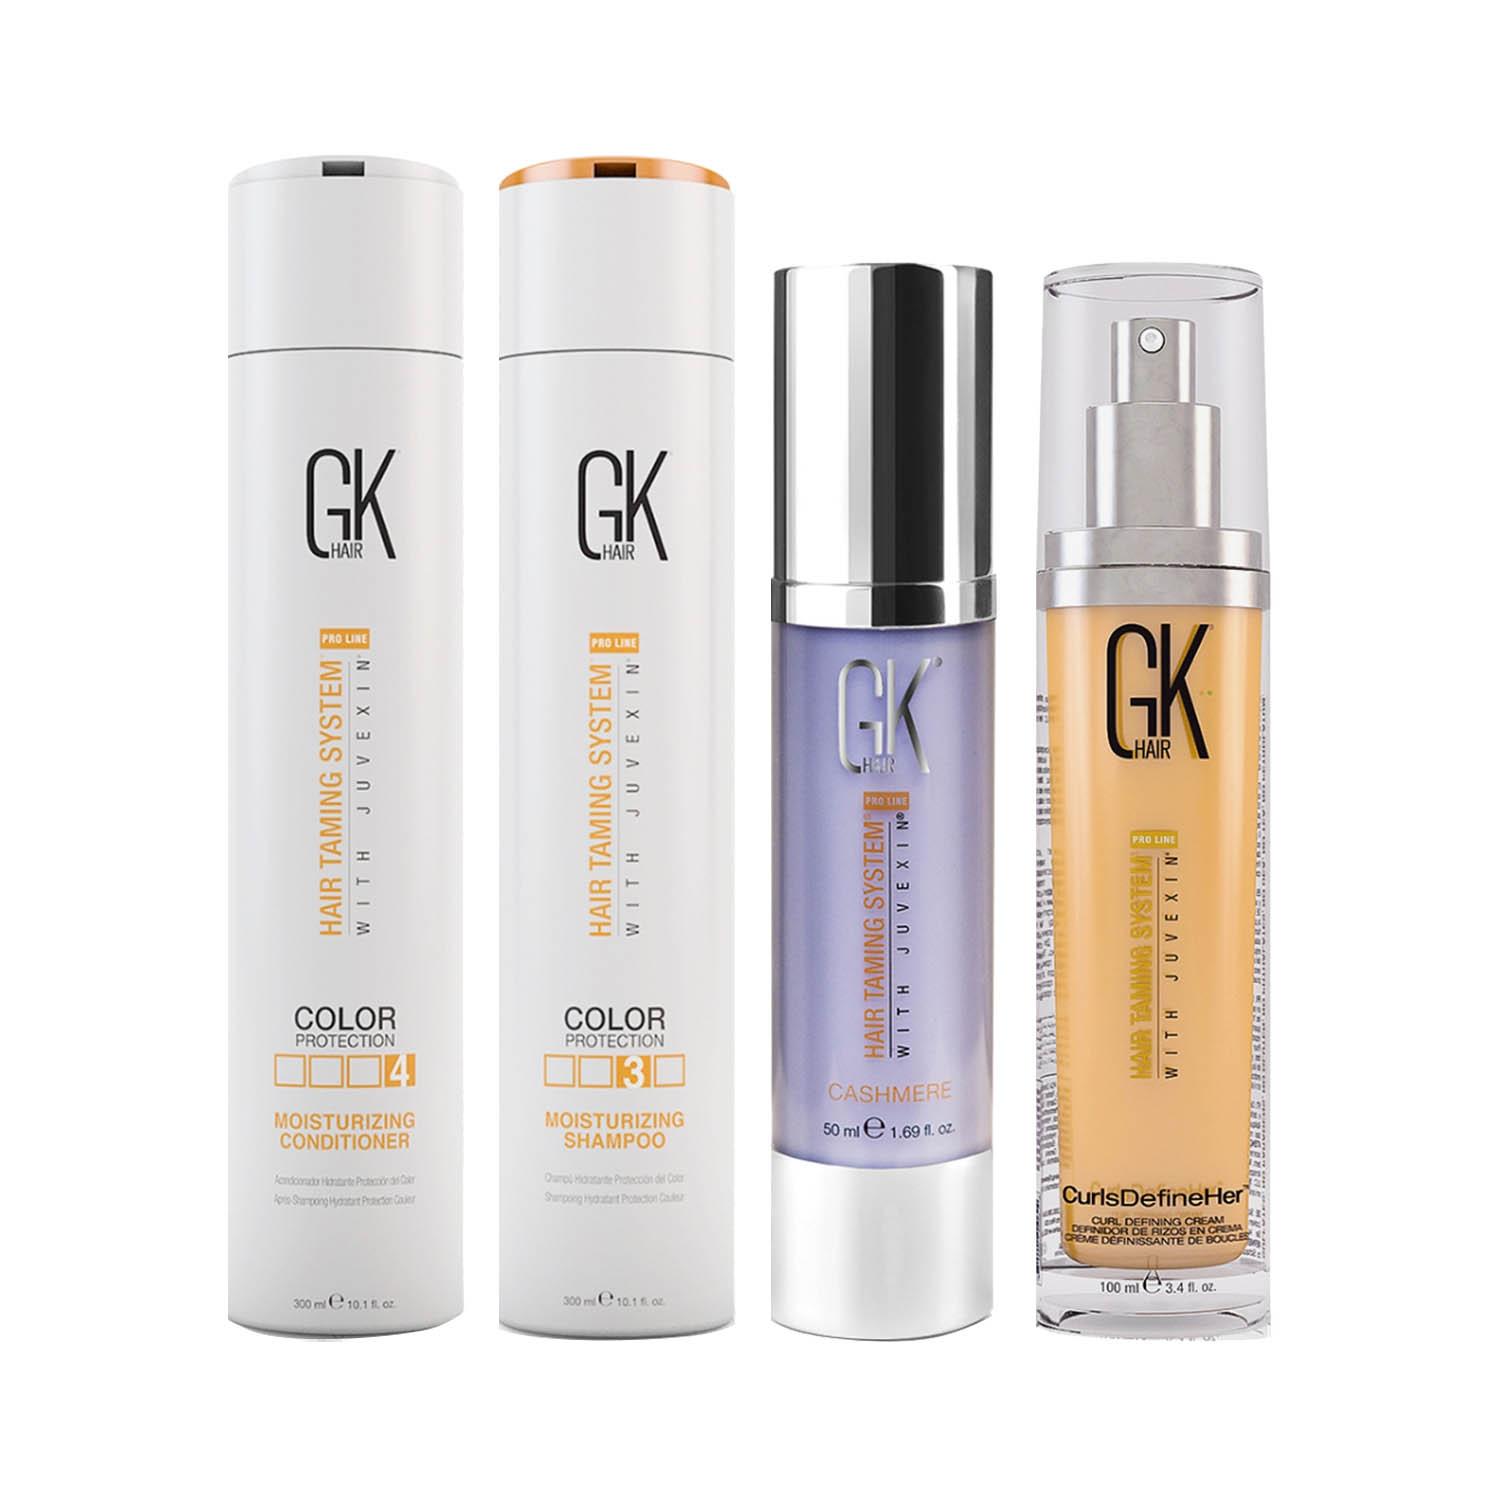 GK Hair | GK Hair Moisturizing Shampoo and Conditioner (300ml), Cashmere (50ml), Curls Defineher Spray Combo